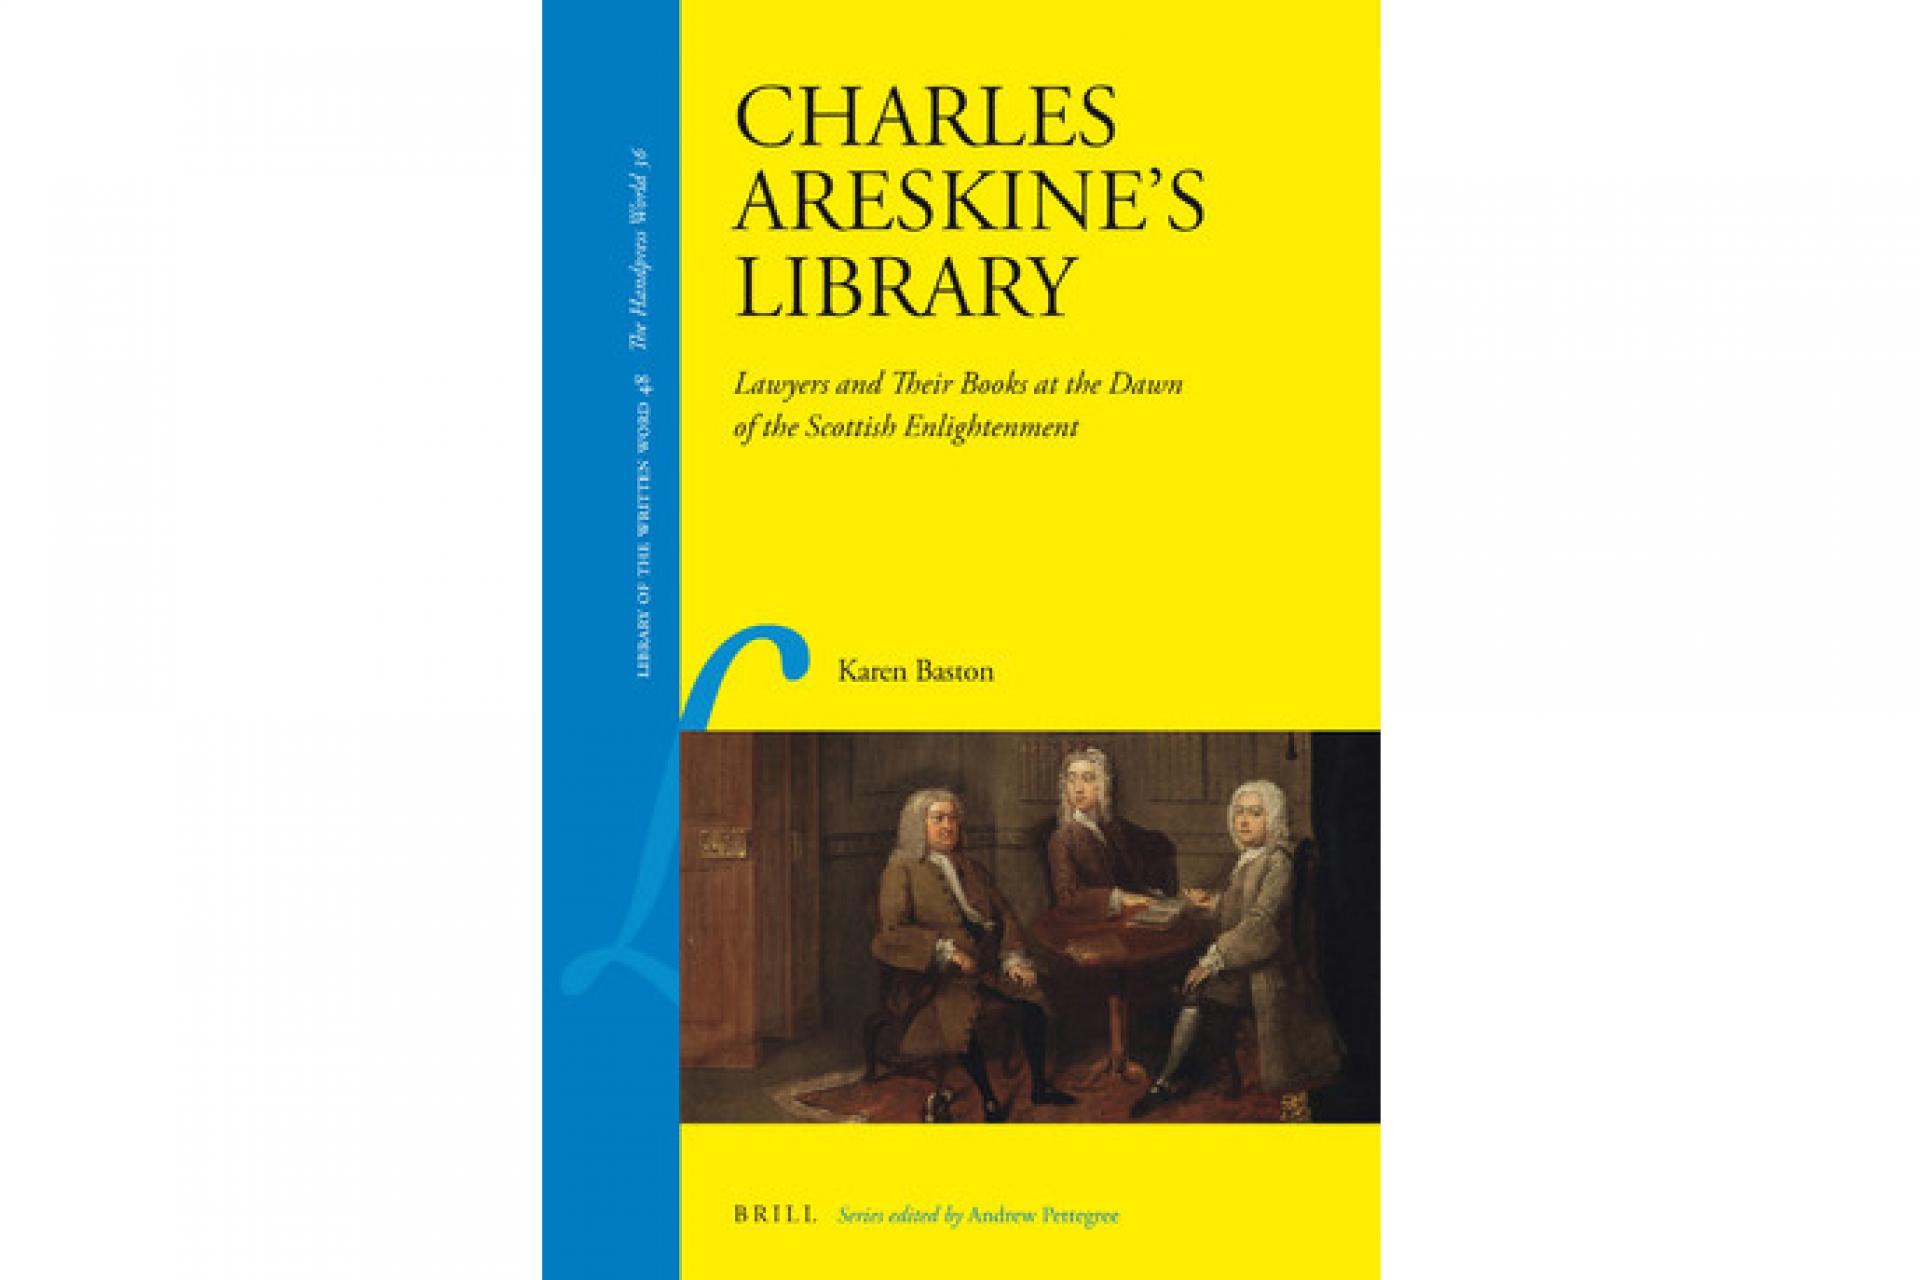 Charles Areskine's Library